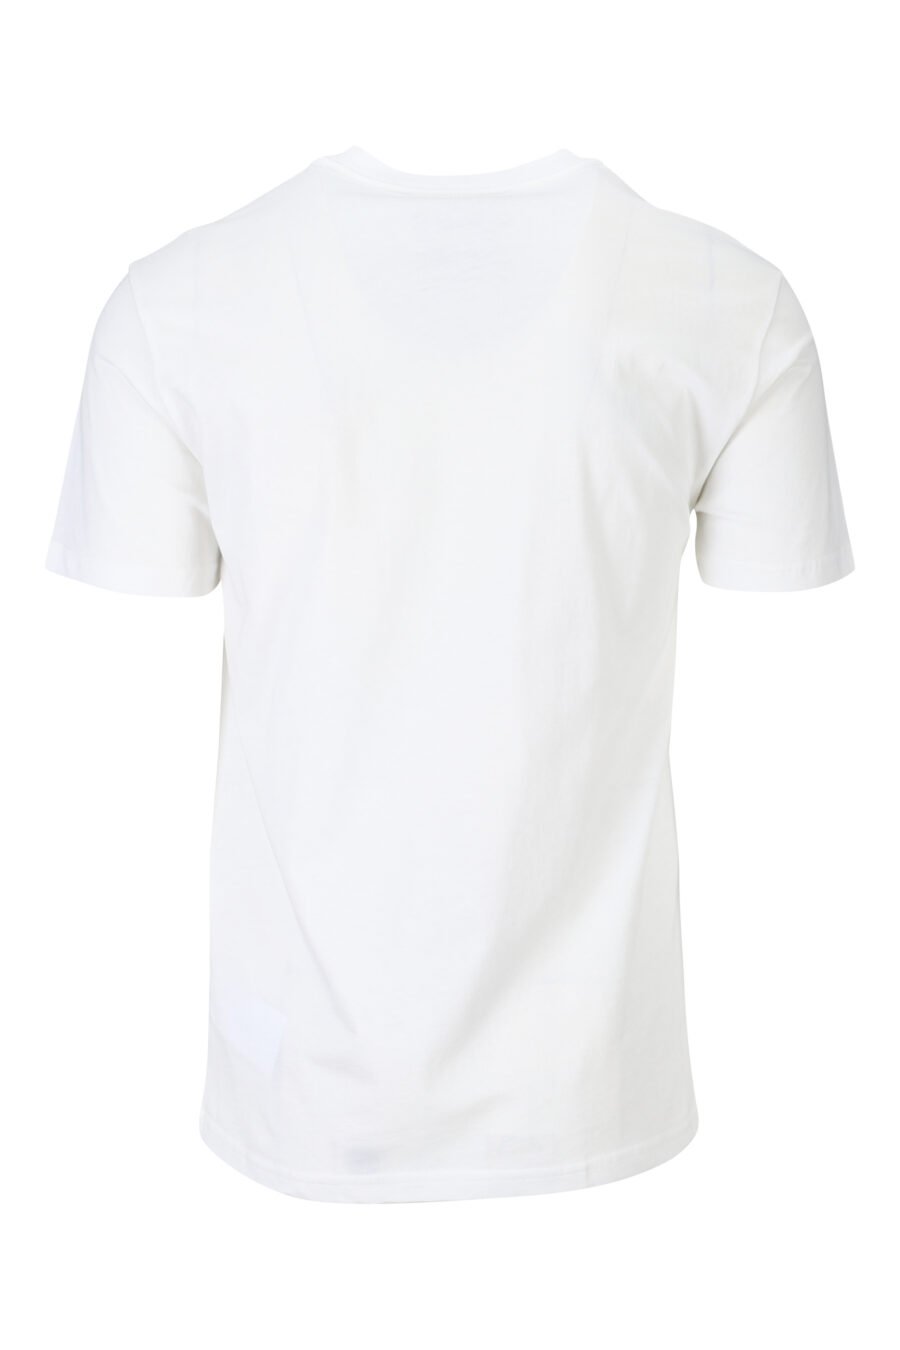 Camiseta blanca eco con minilogo oso - 889316725384 1